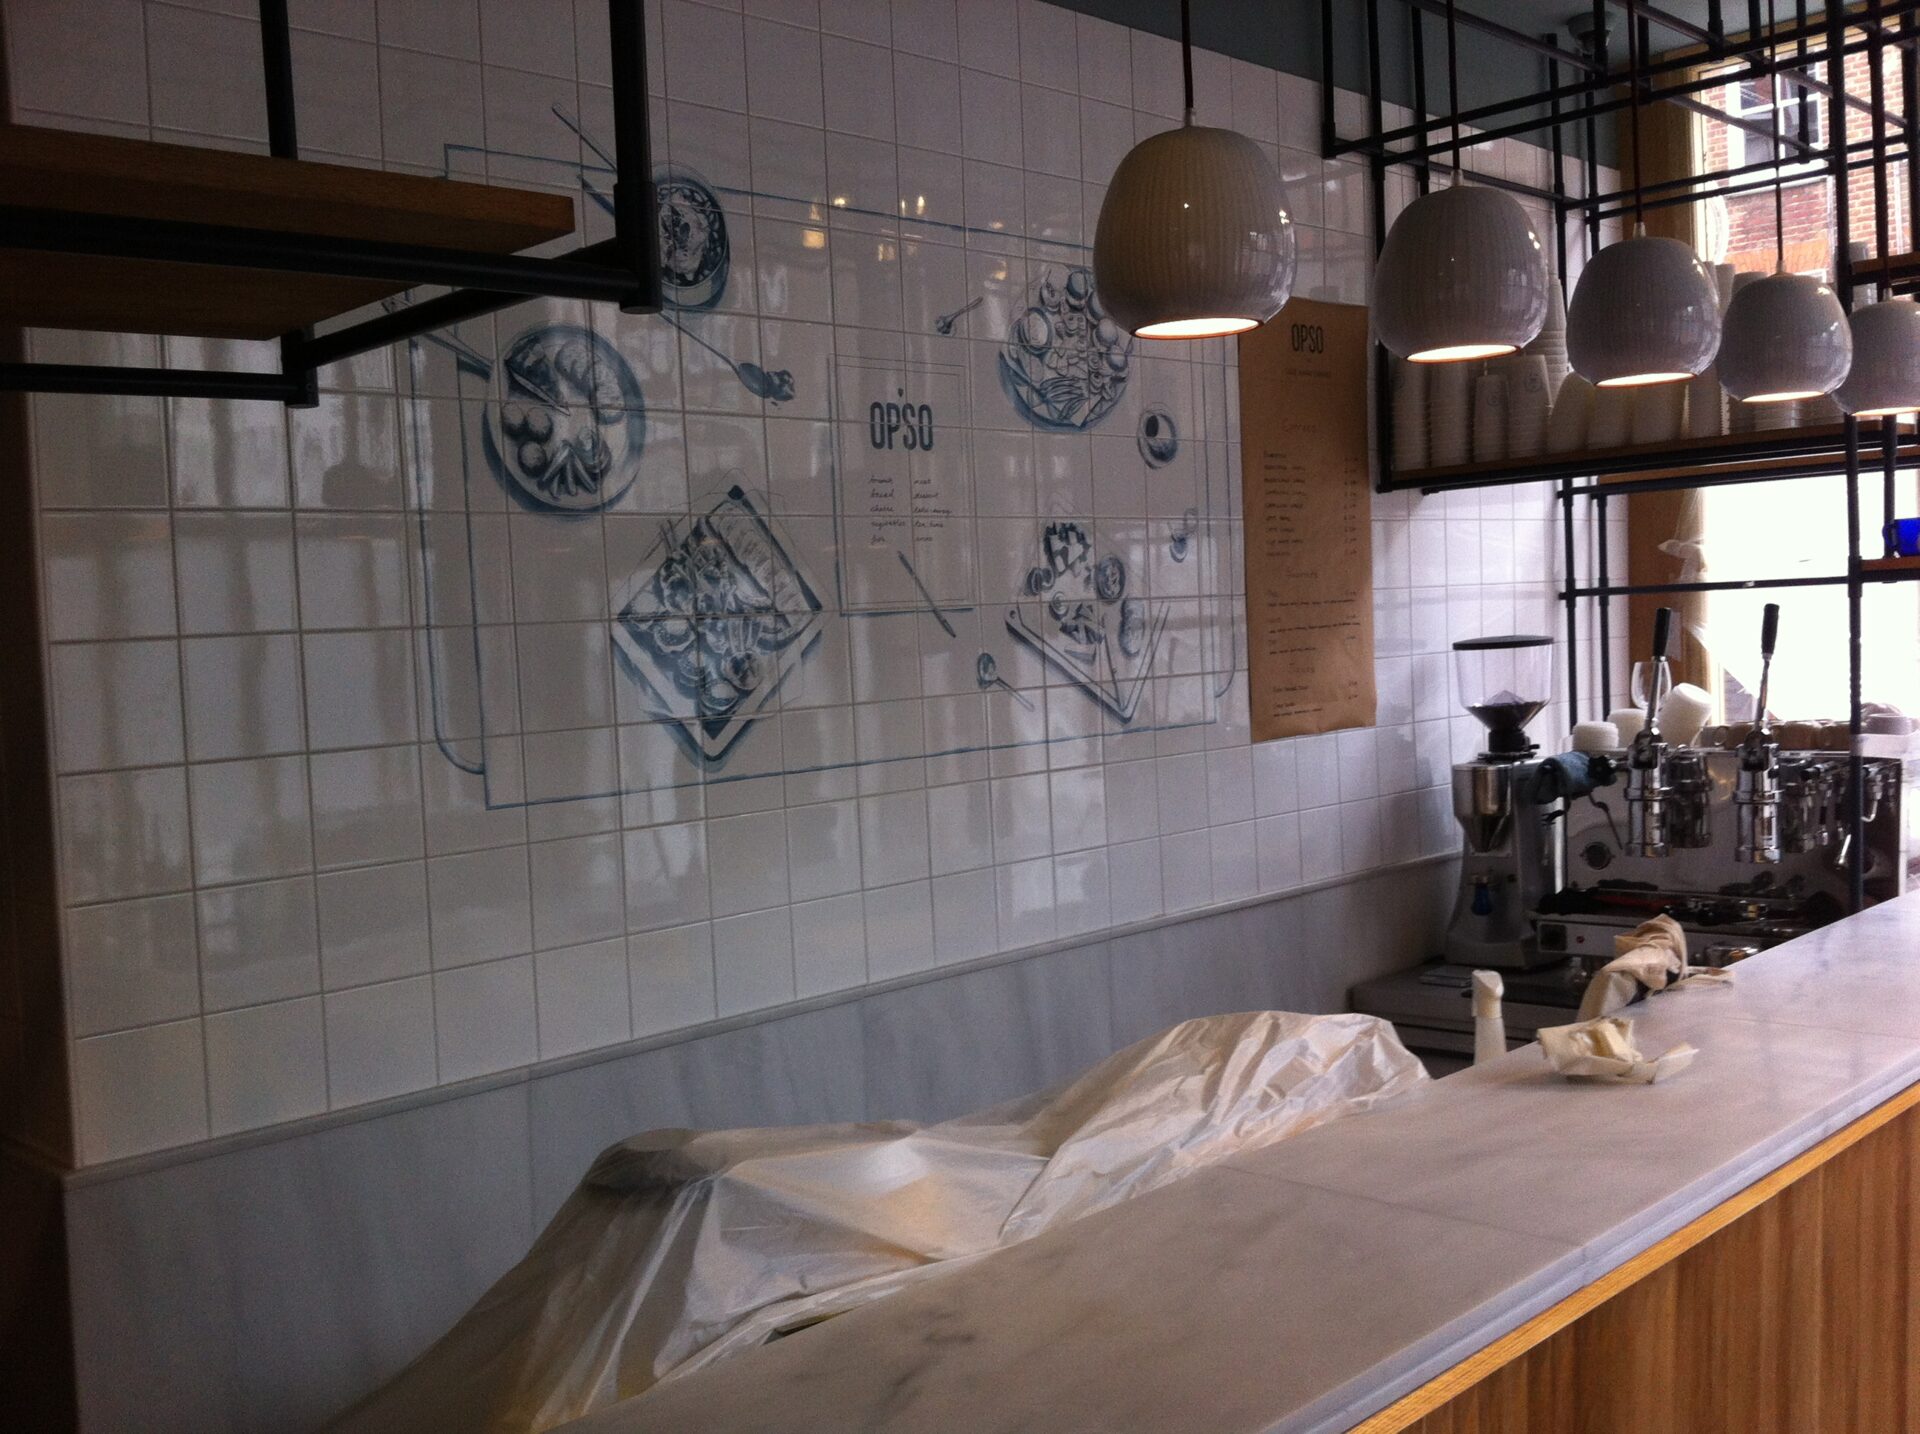 Interior Of Opso Restaurant - Tile Mural Creative Arts